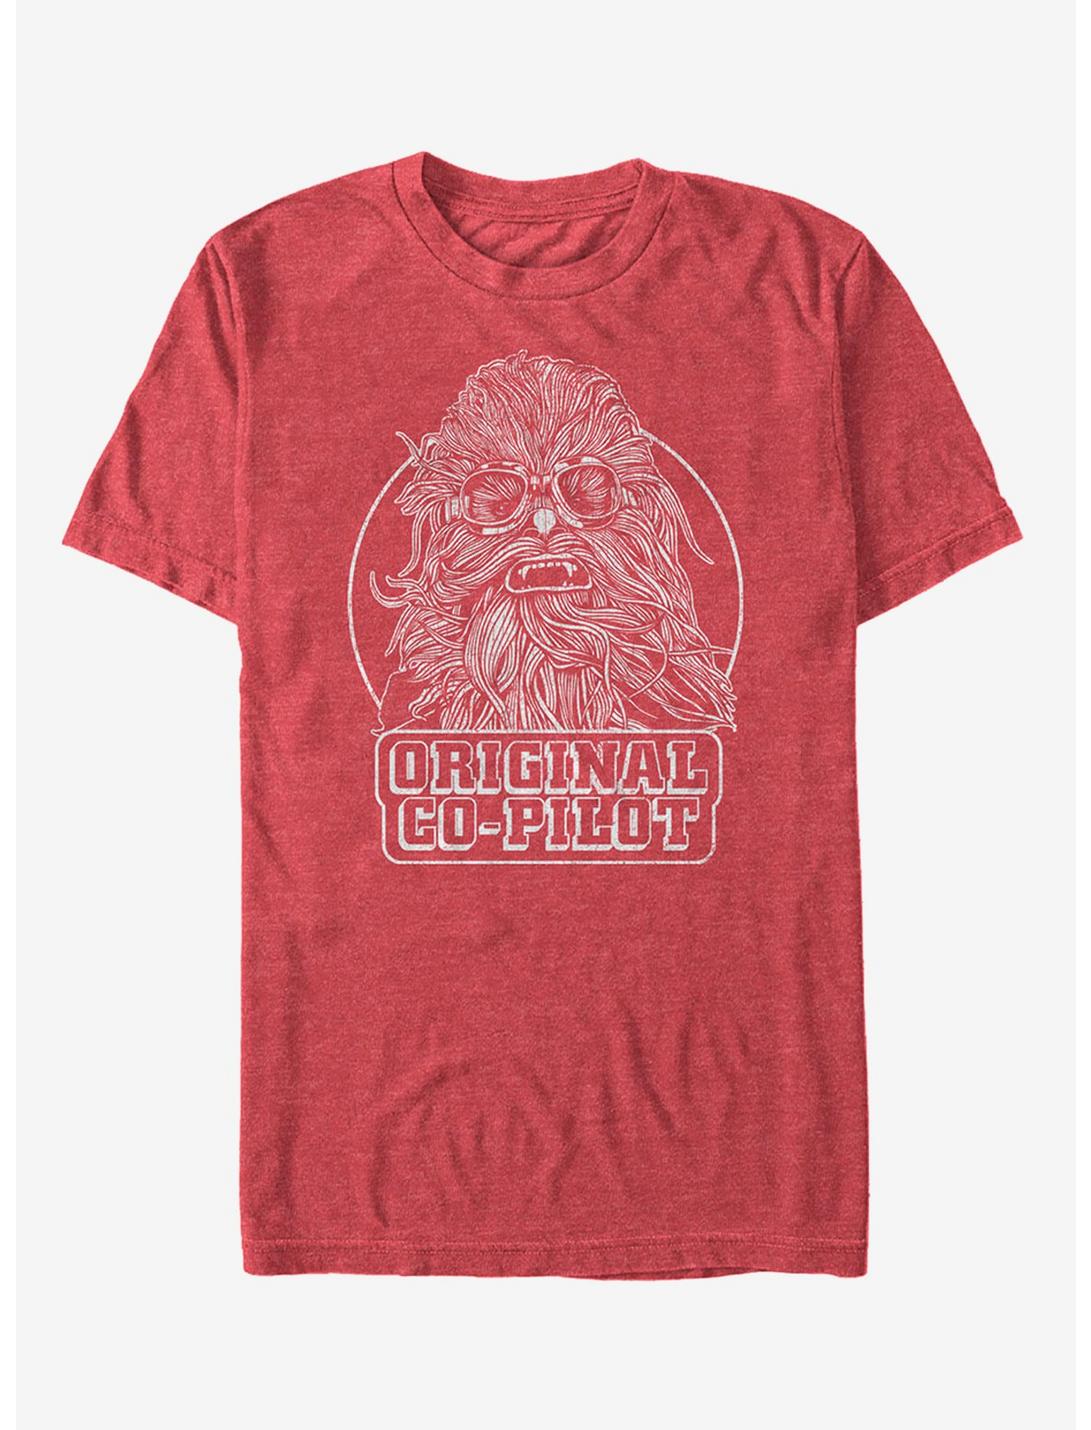 Star Wars Original Co-Pilot Chewie T-Shirt, RED HTR, hi-res